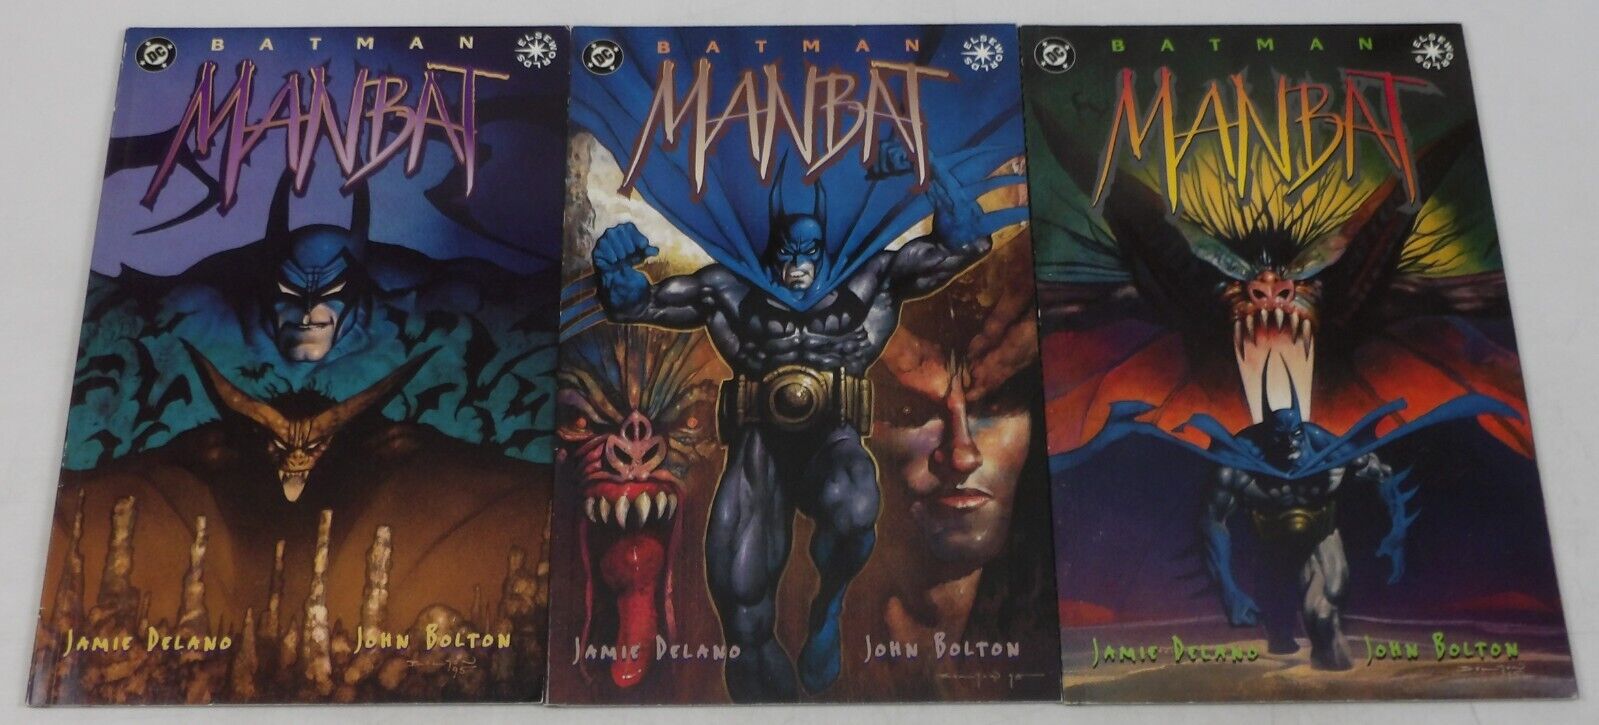 Batman Man-Bat #1-3 VF/NM complete series Jamie Delano John Bolton Manbat DC